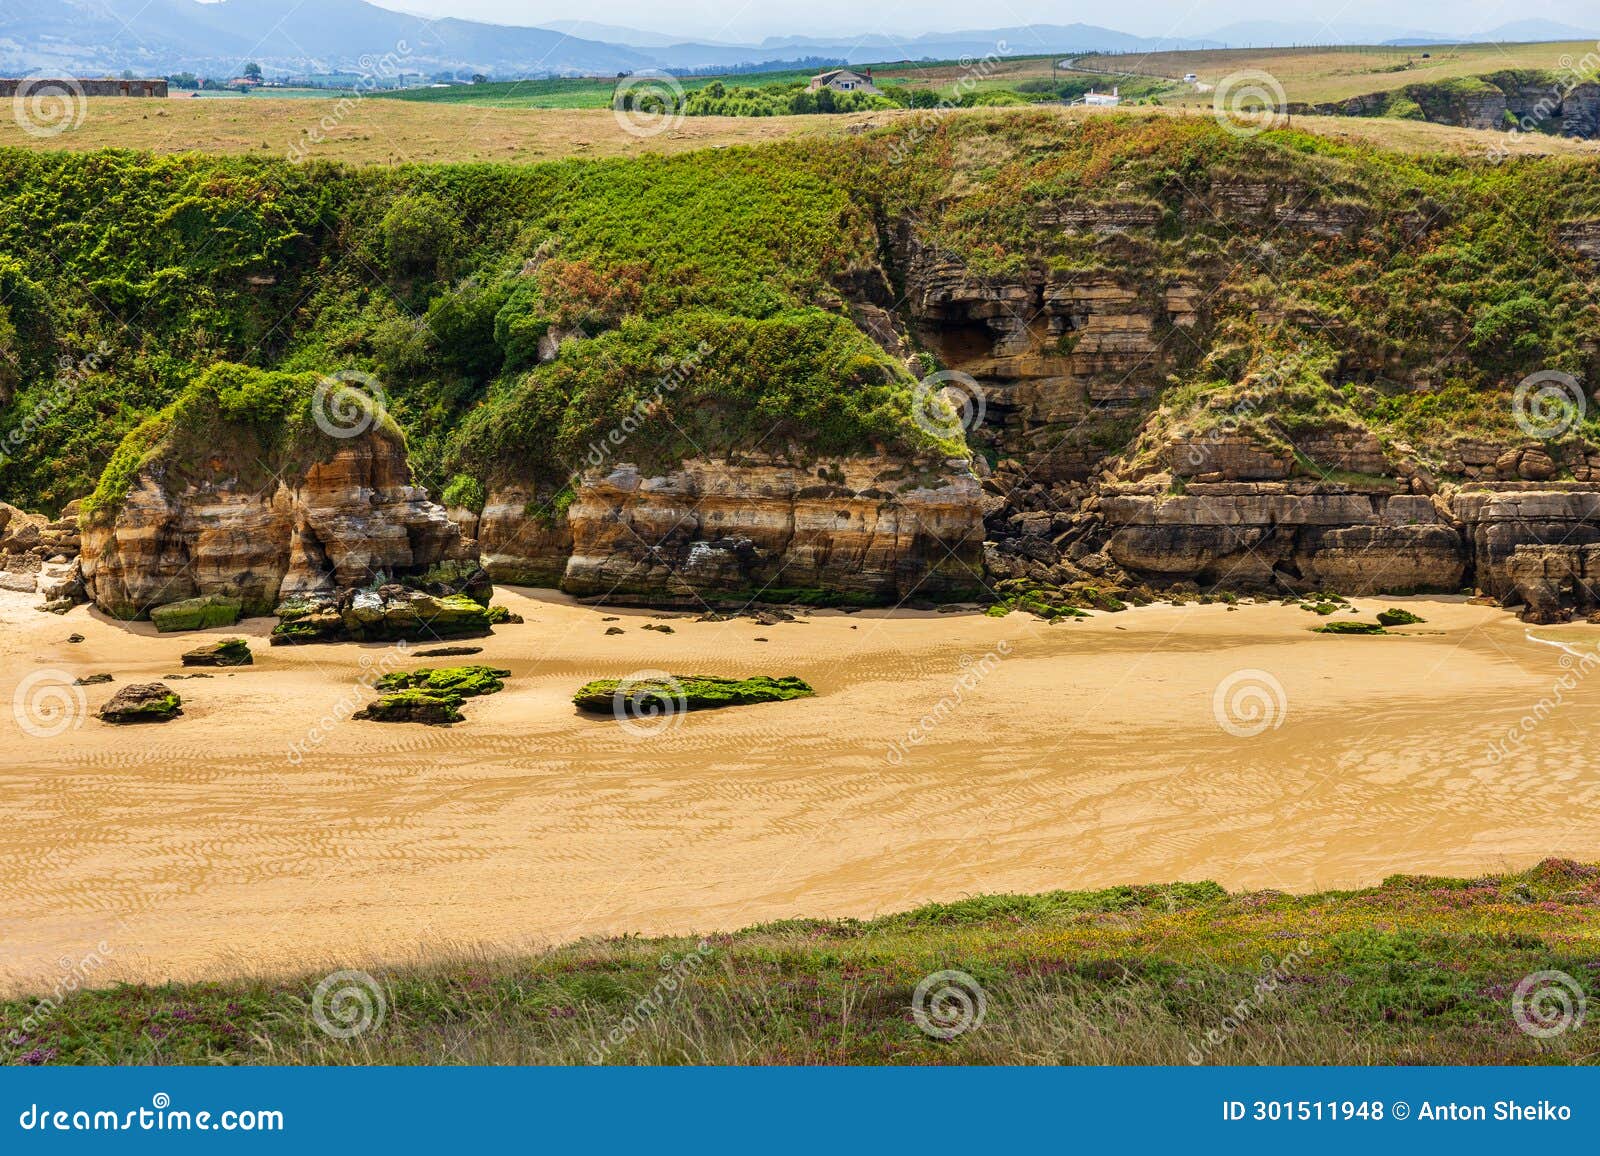 playa de galizano, beach with soft cliffs. ribamontan al mar, cantabria, spain